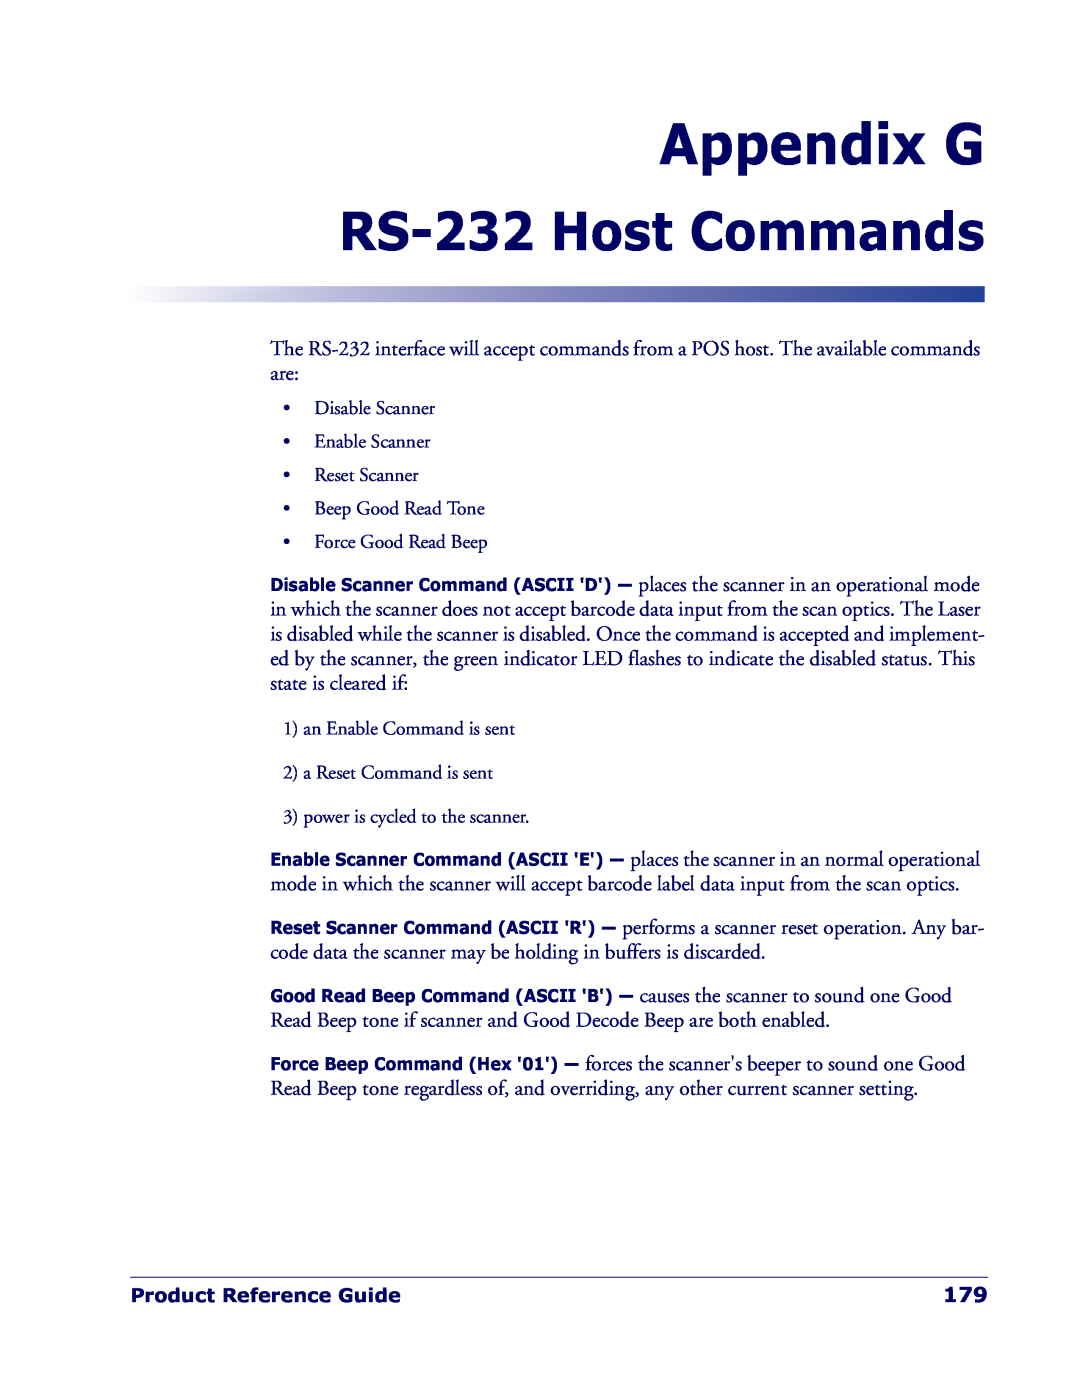 Datalogic Scanning QD 2300 manual Appendix G, RS-232 Host Commands 